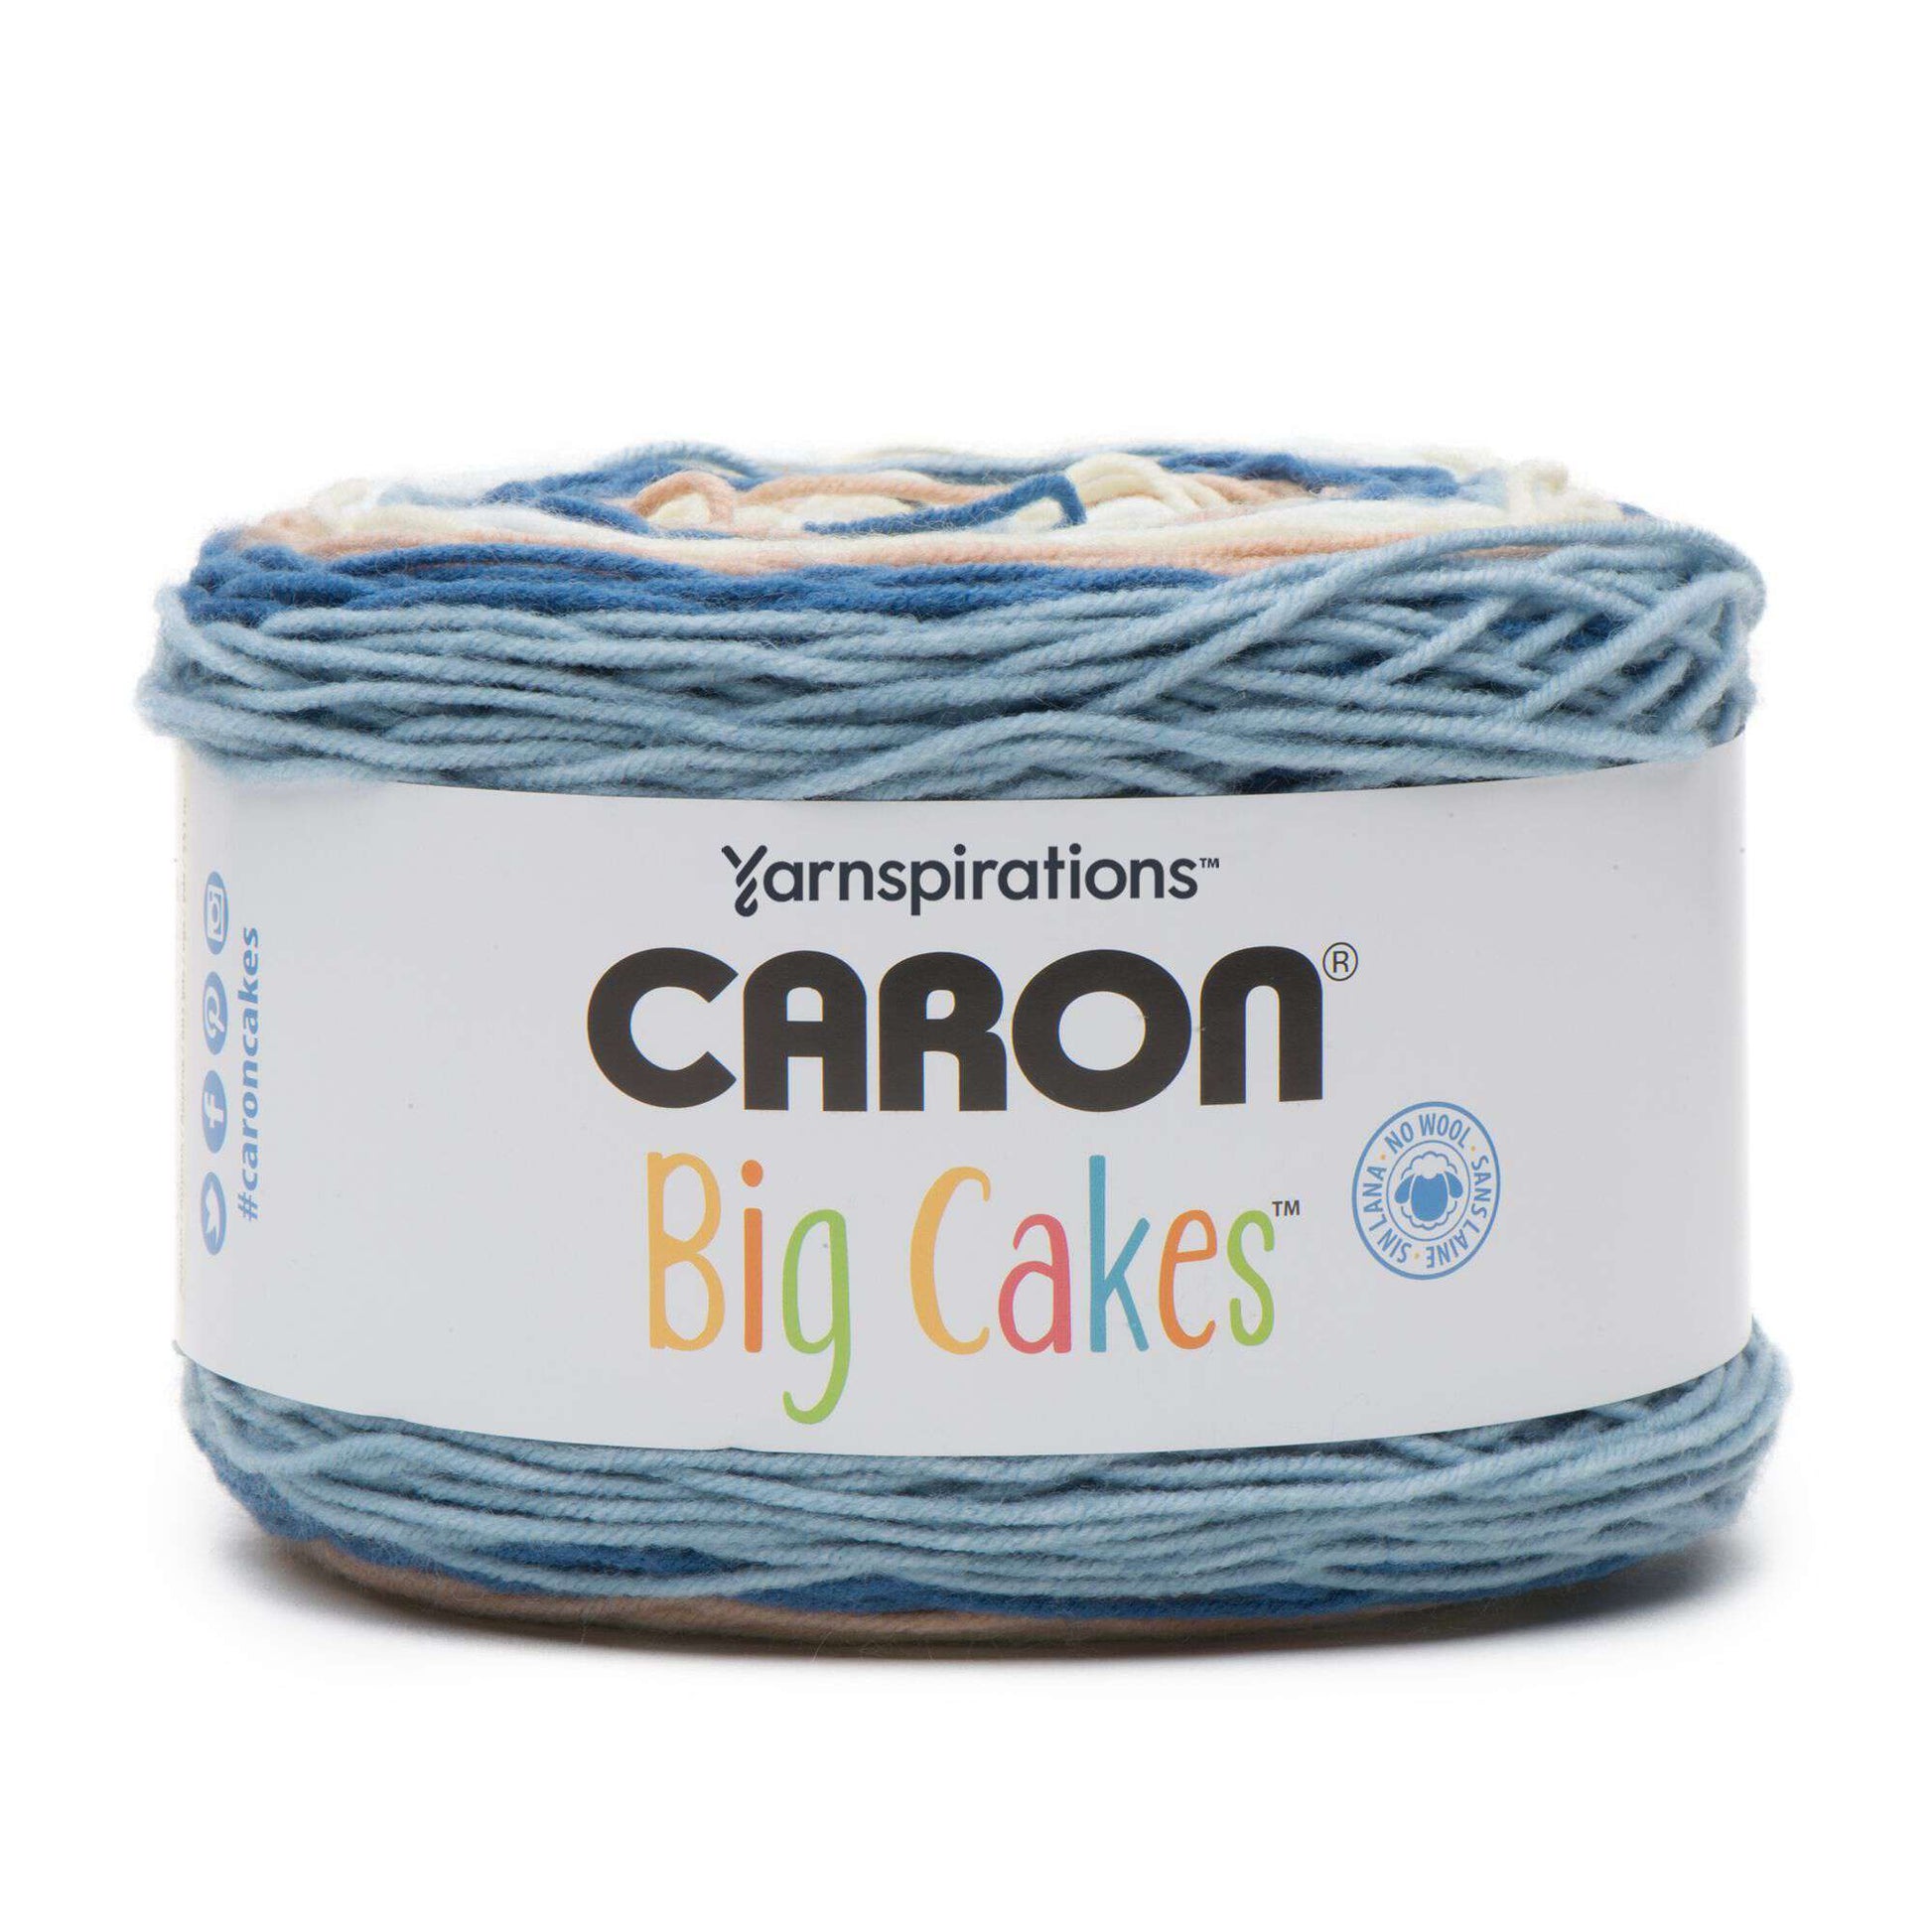 Caron Big Cakes Yarn, Retailer Exclusive